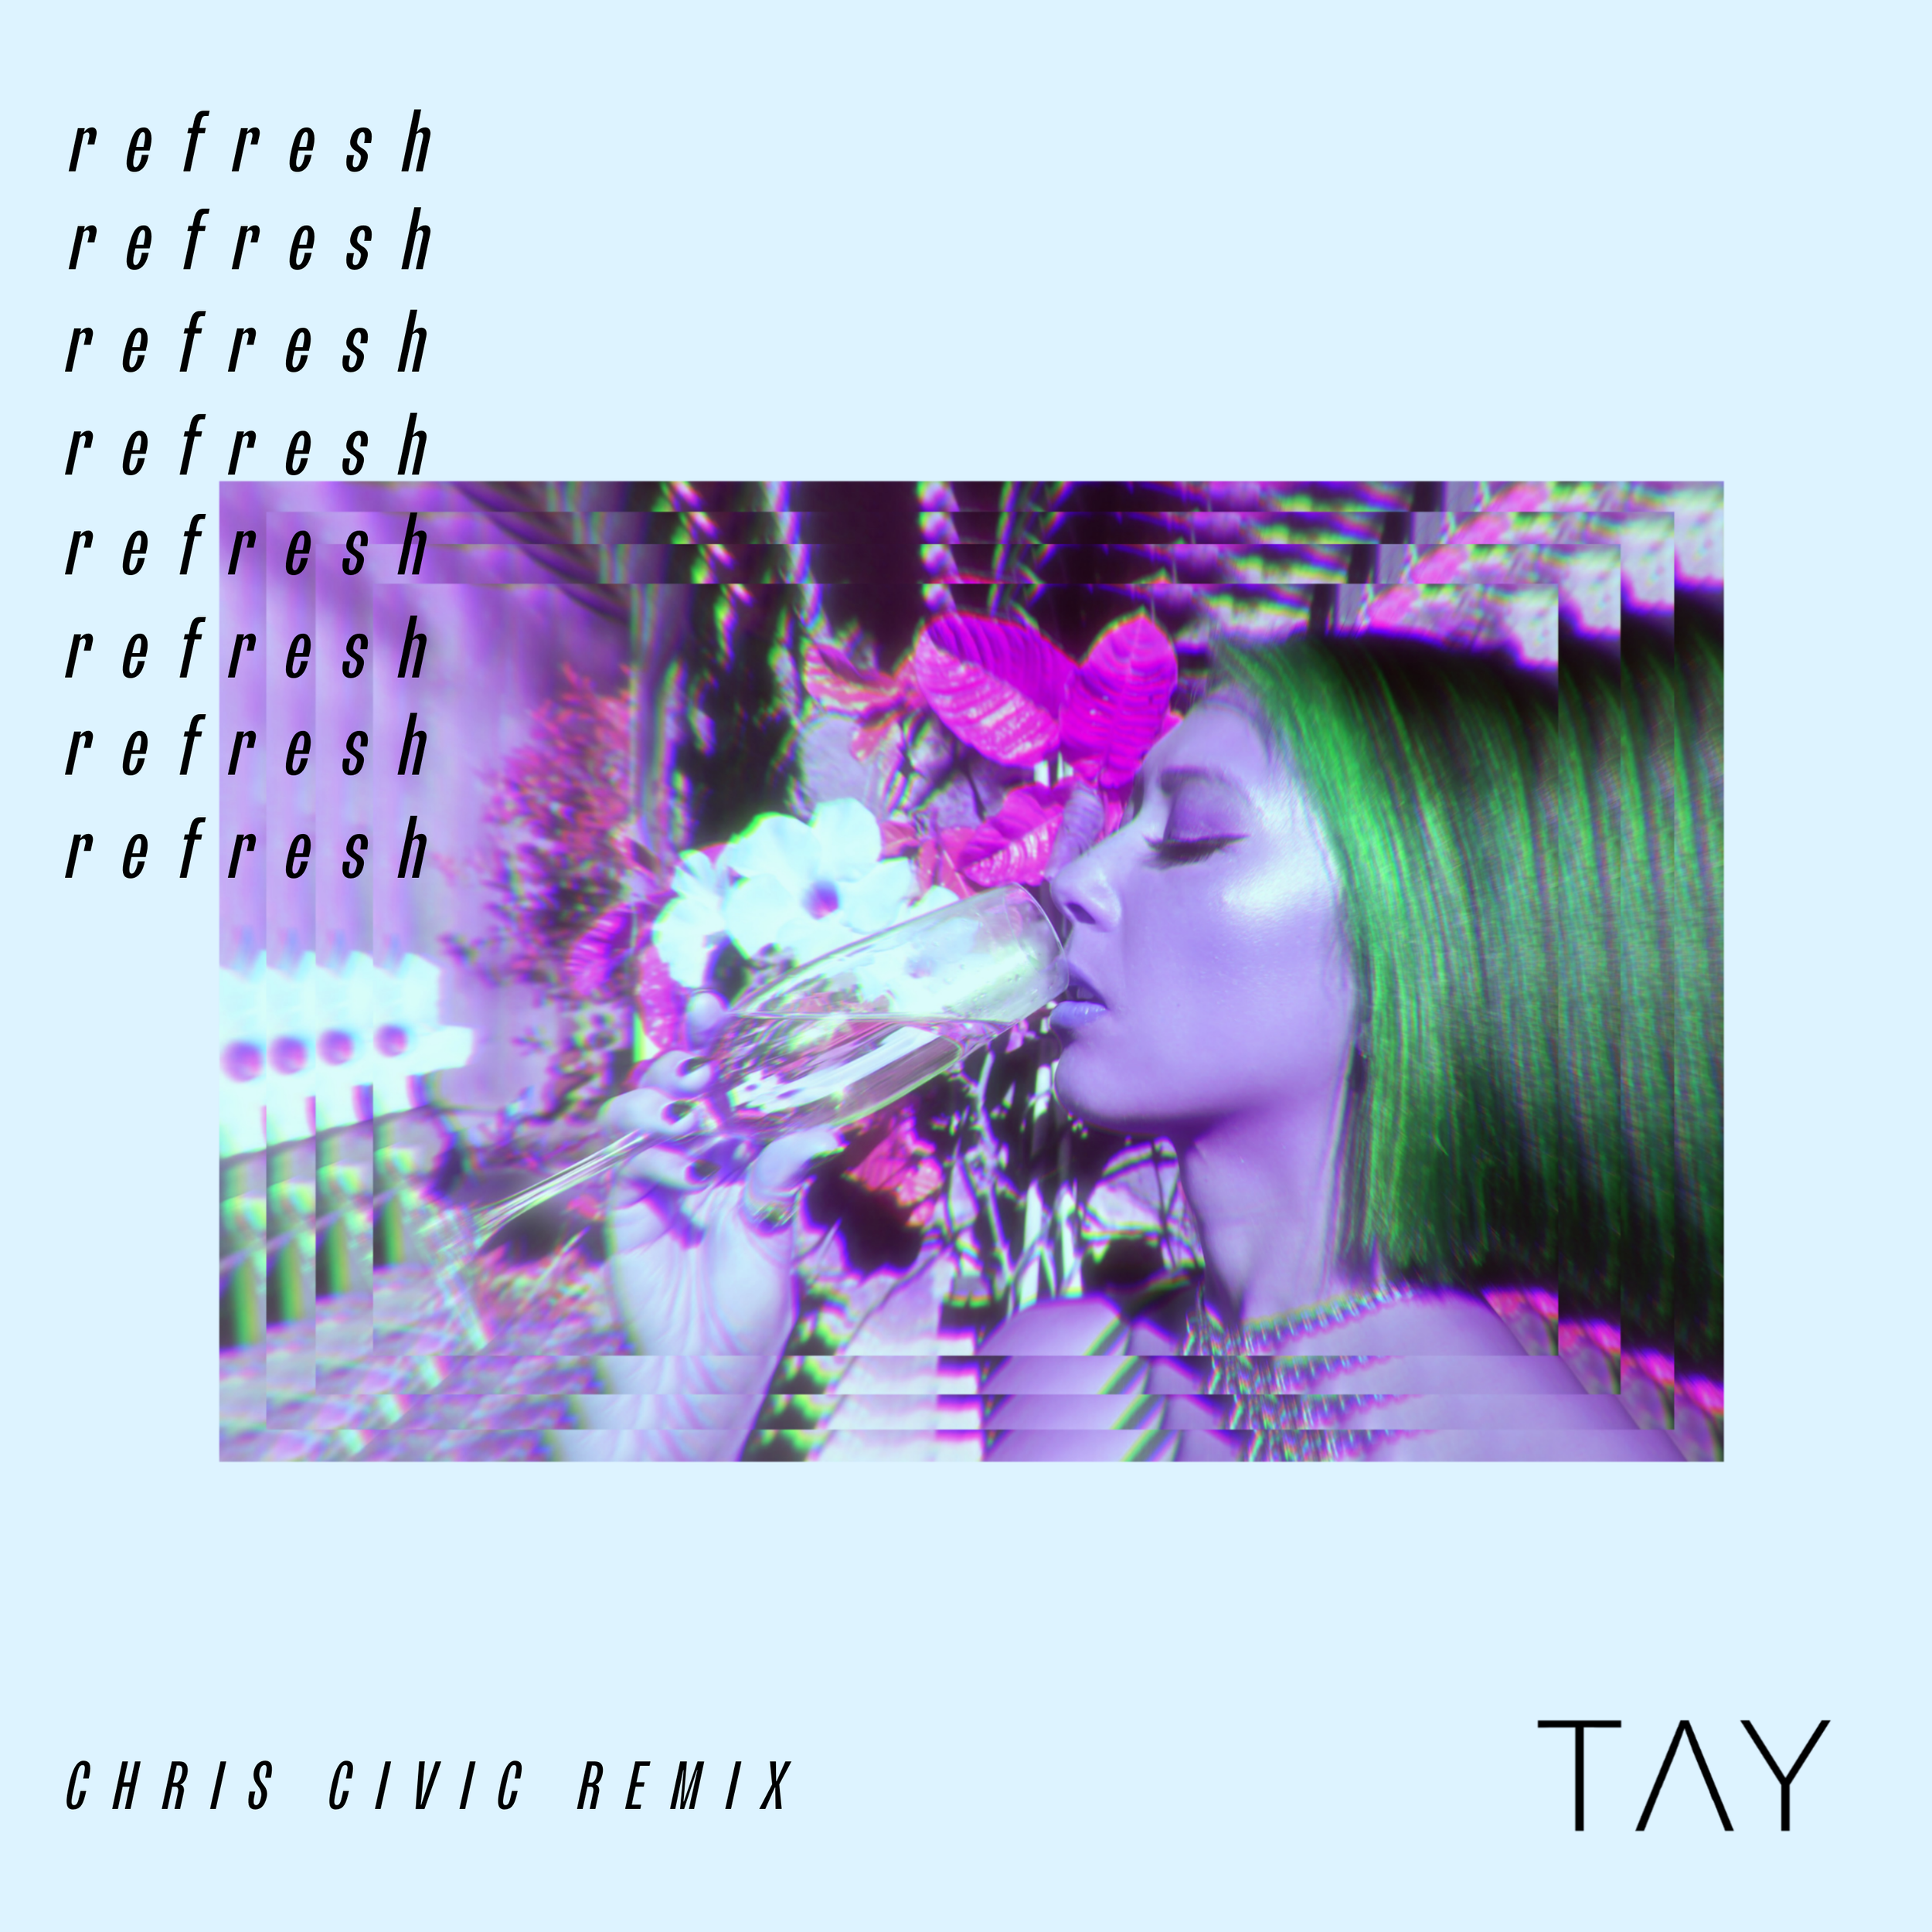 refresh (Chris Civic Remix) cover art.png